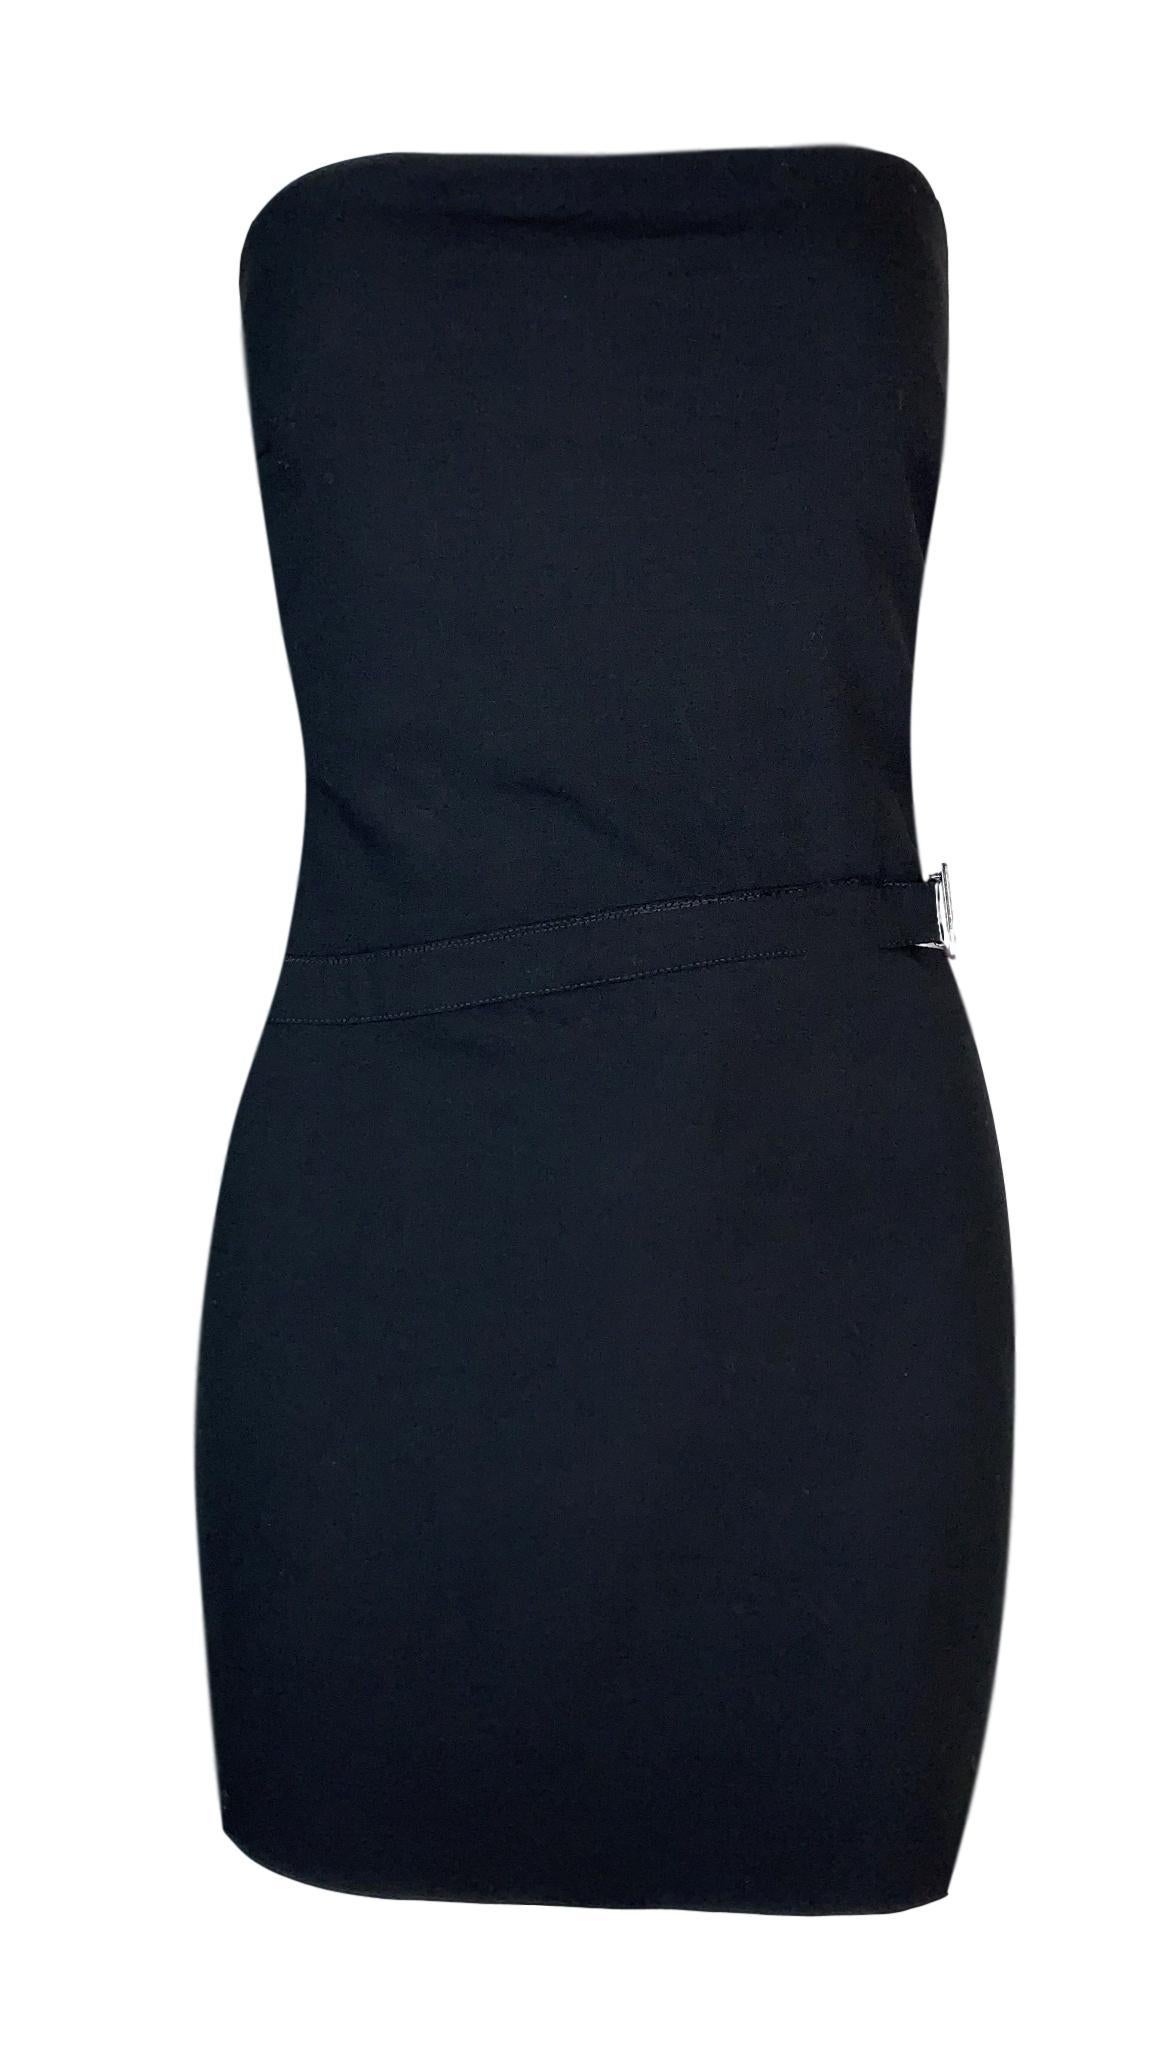 black cut out strapless dress